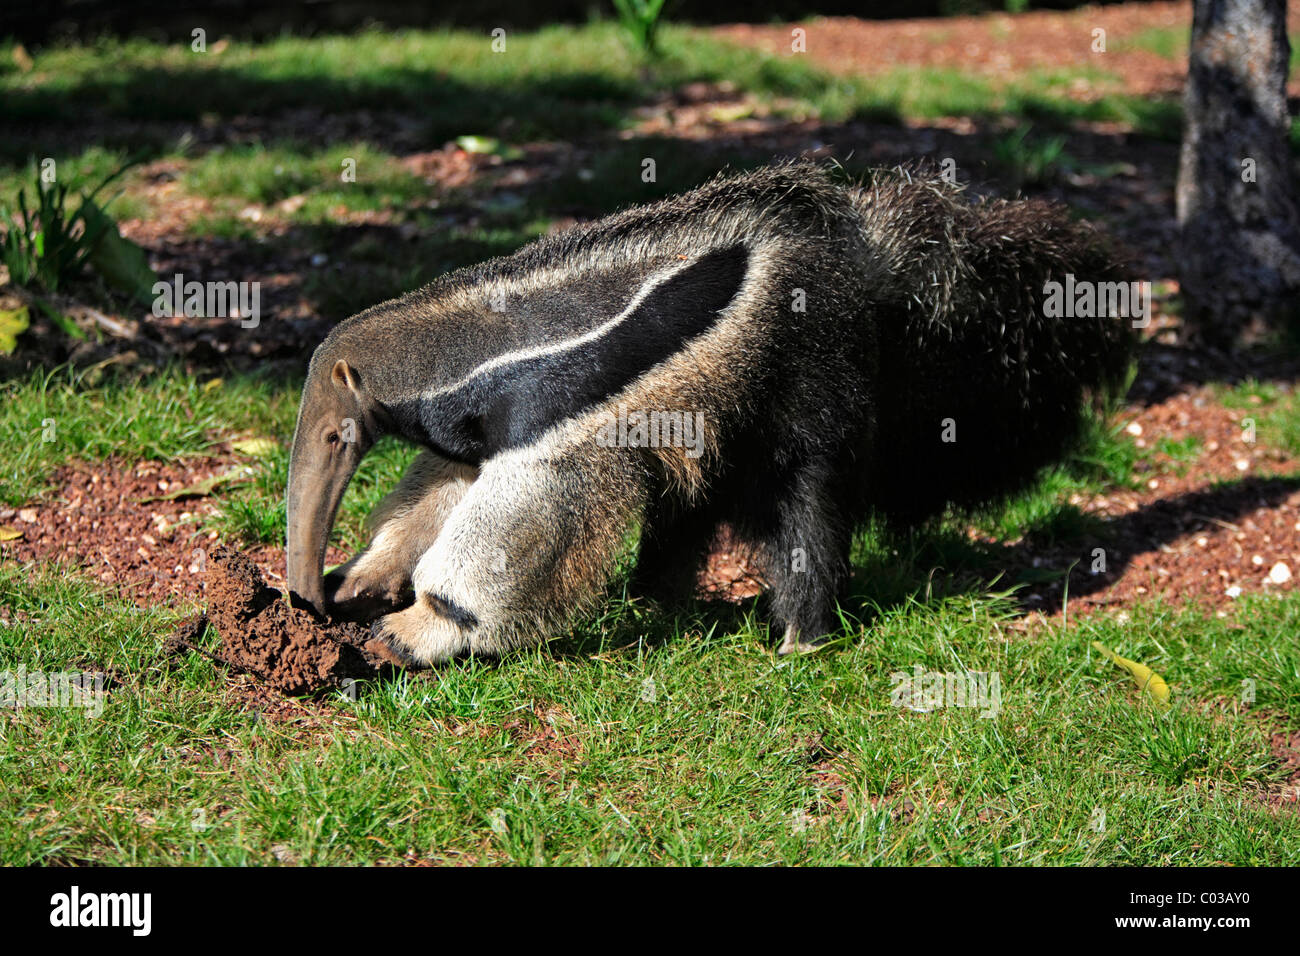 Giant Anteater (Myrmecophaga tridactyla), adult feeding on termites in a termite mound, Pantanal, Brazil, South America Stock Photo